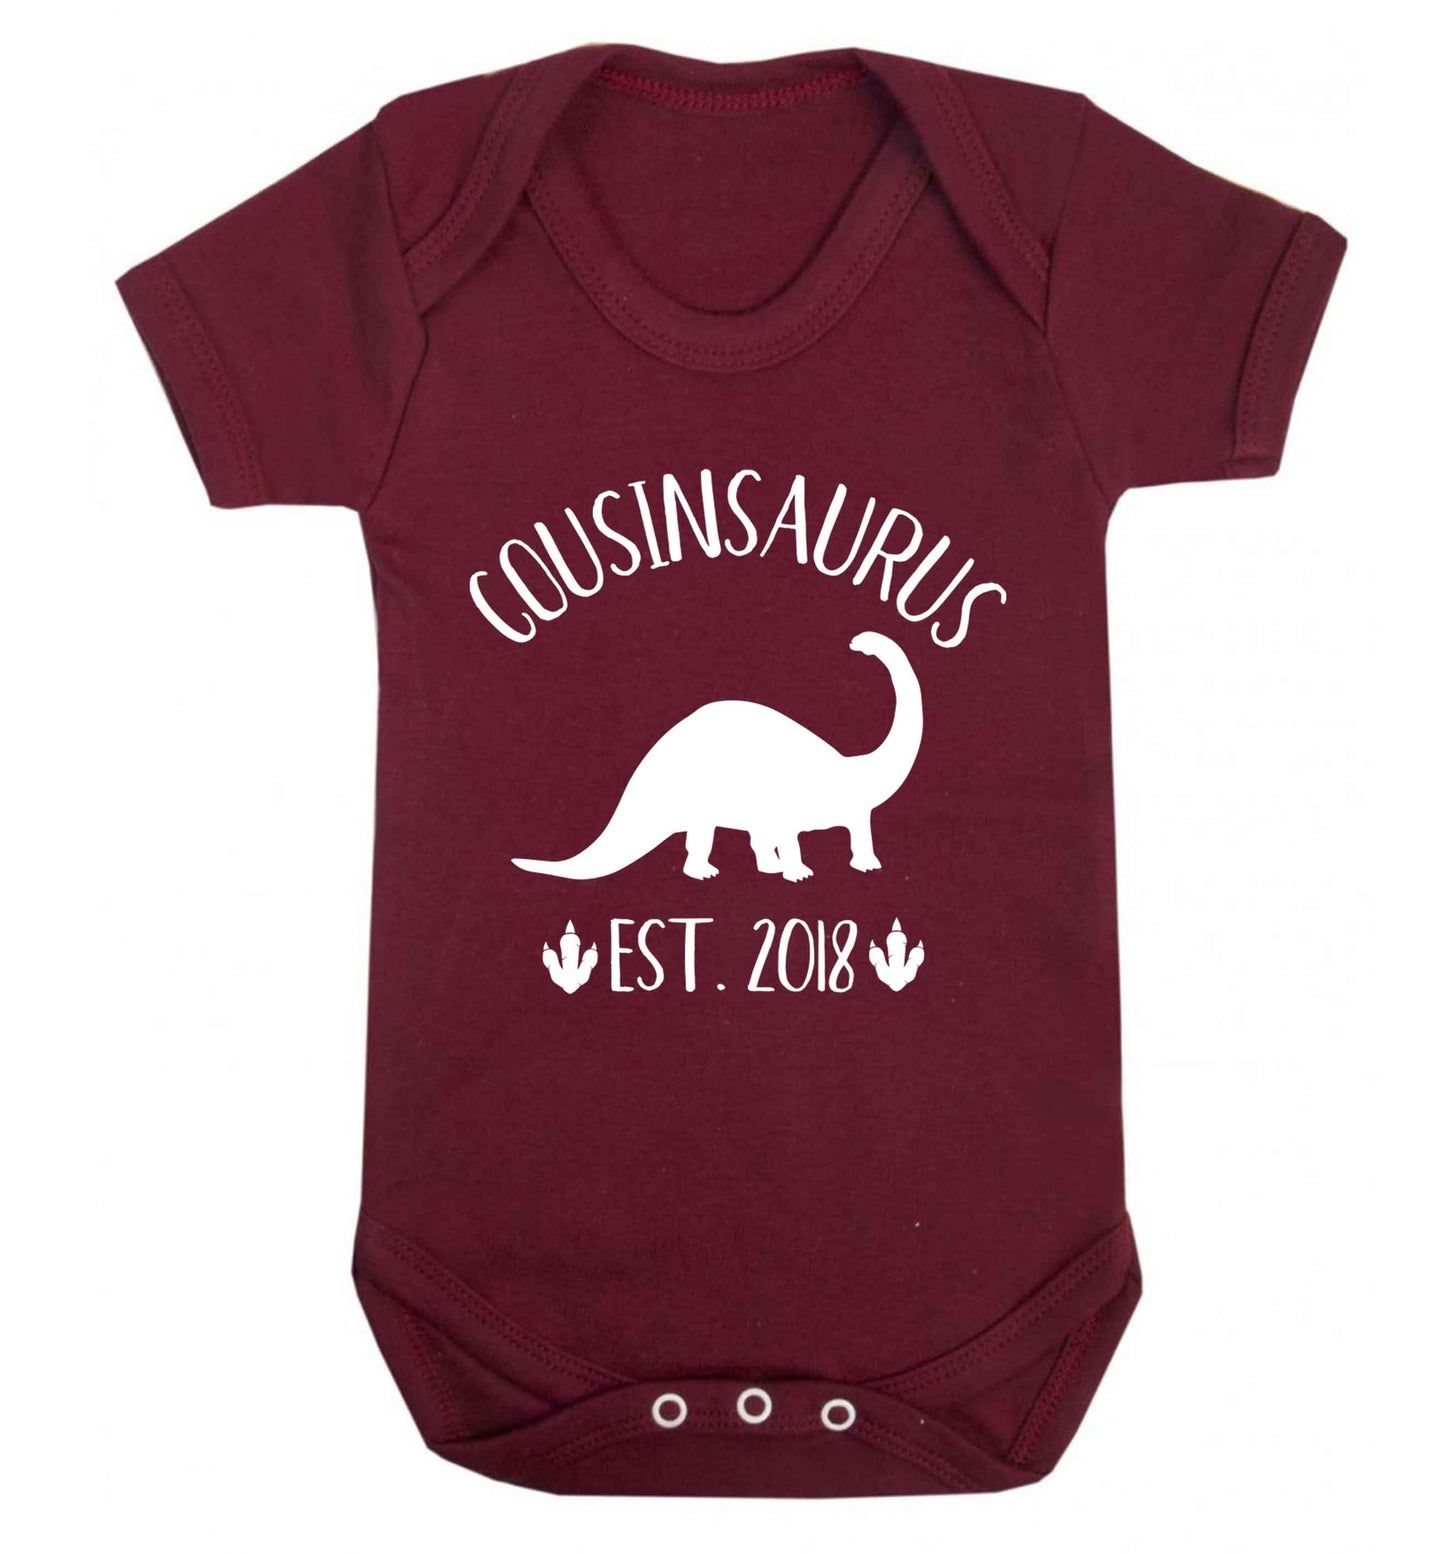 Personalised cousinsaurus since (custom date) Baby Vest maroon 18-24 months